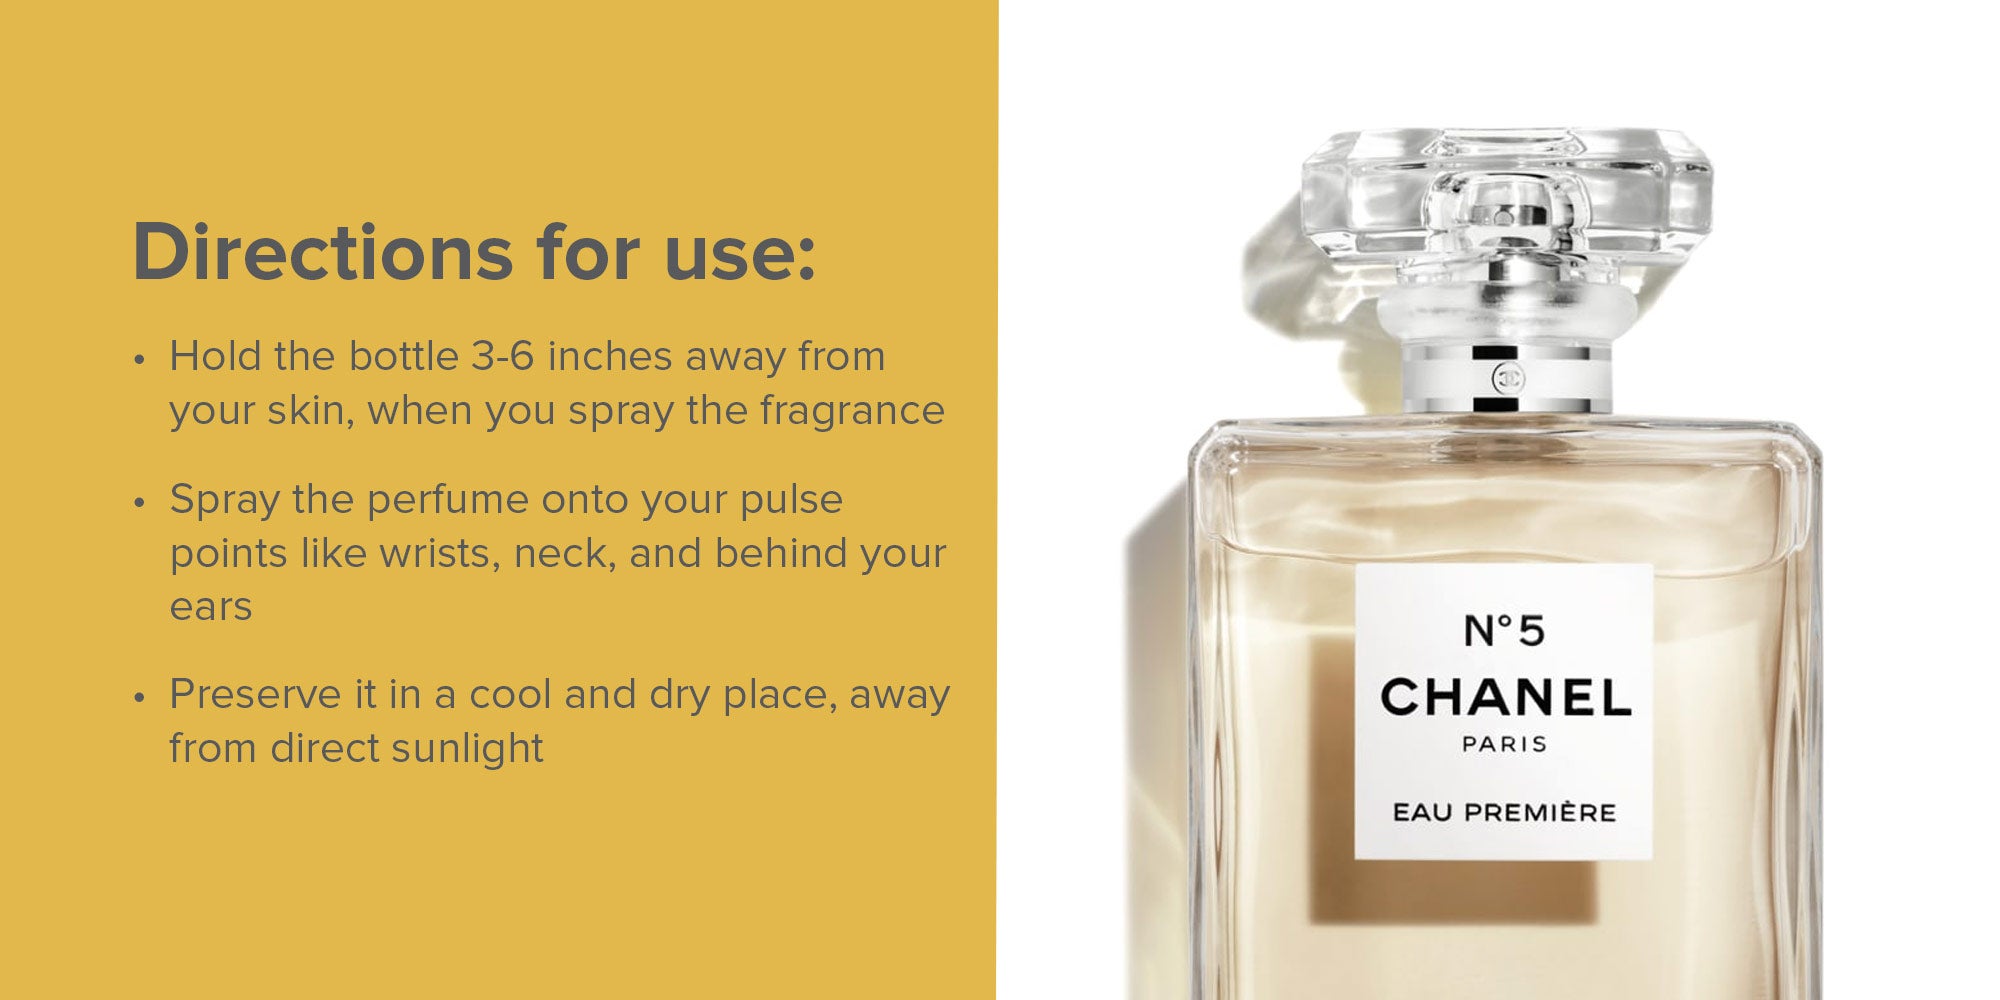 chanel no 5 eau premiere perfume for women